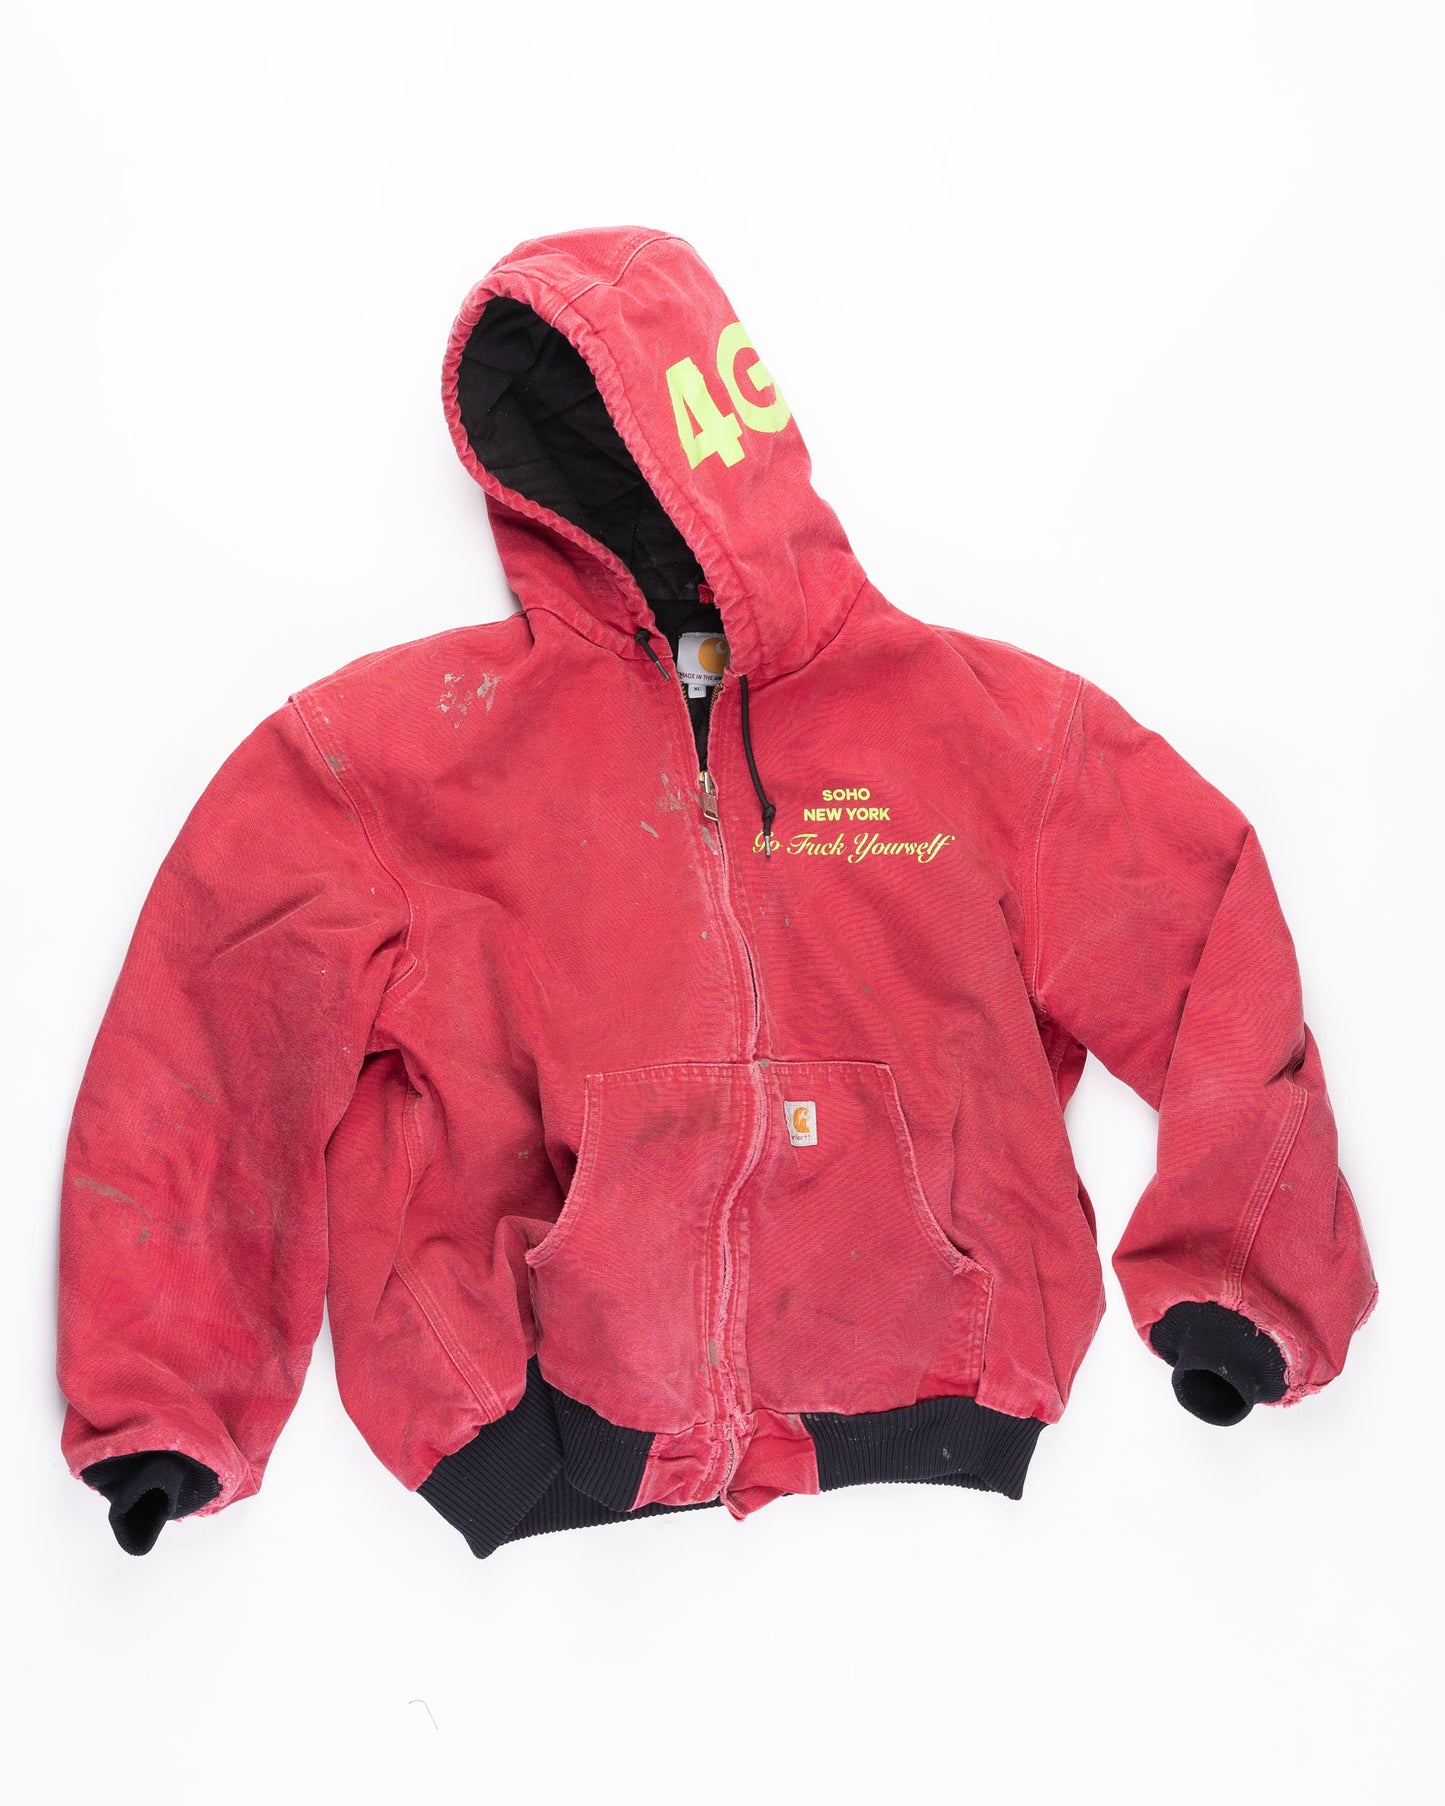 Red Carhart Jacket Size: XLarge